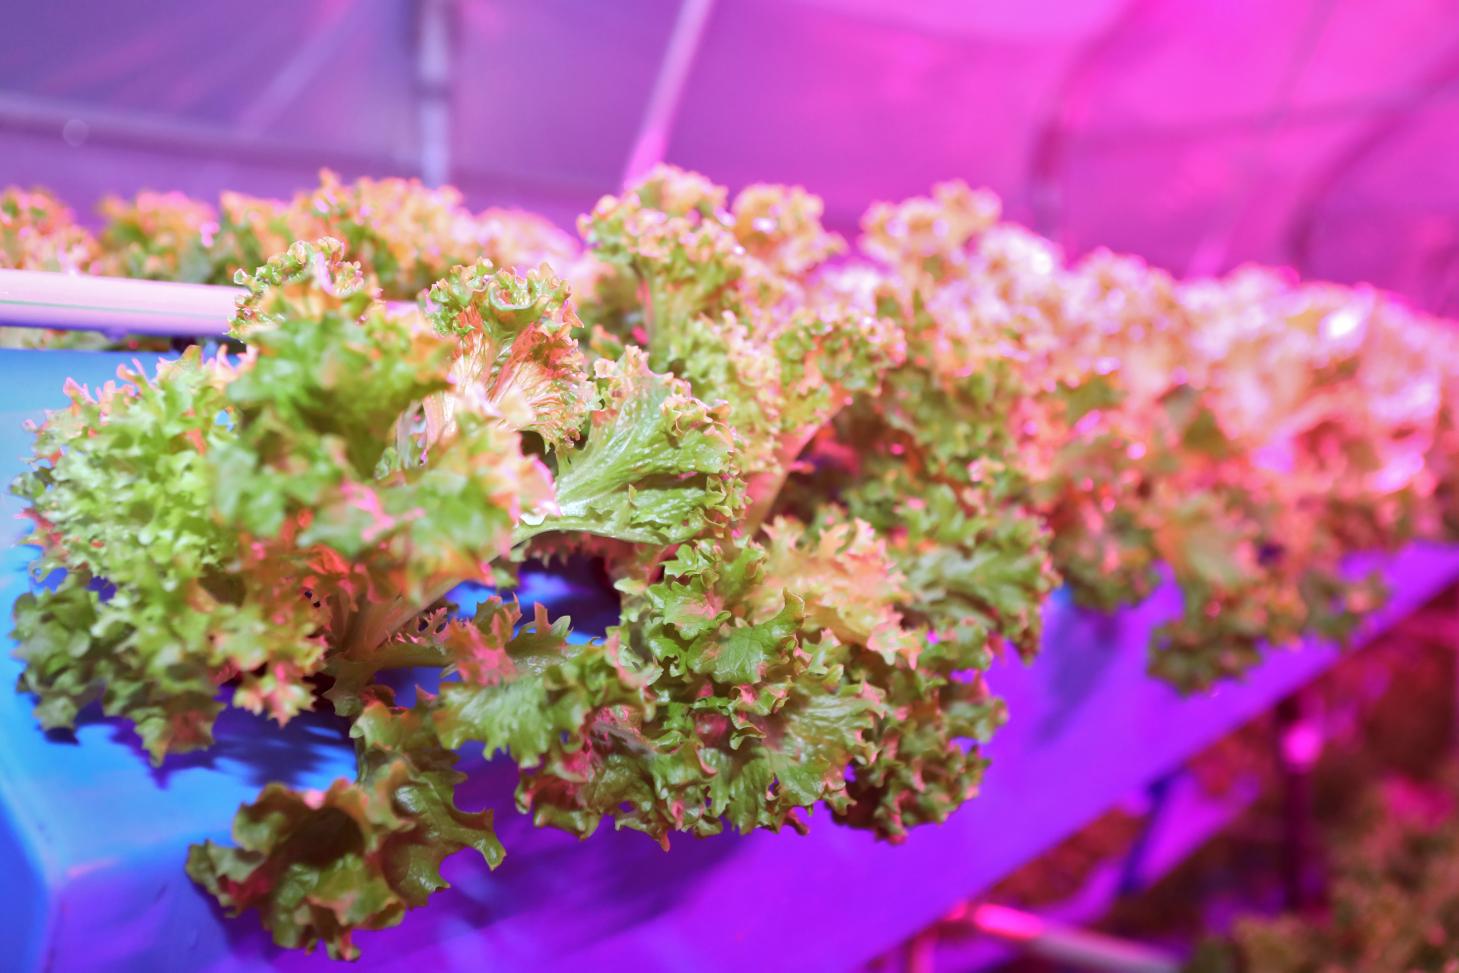 Growing plants using aeroponics